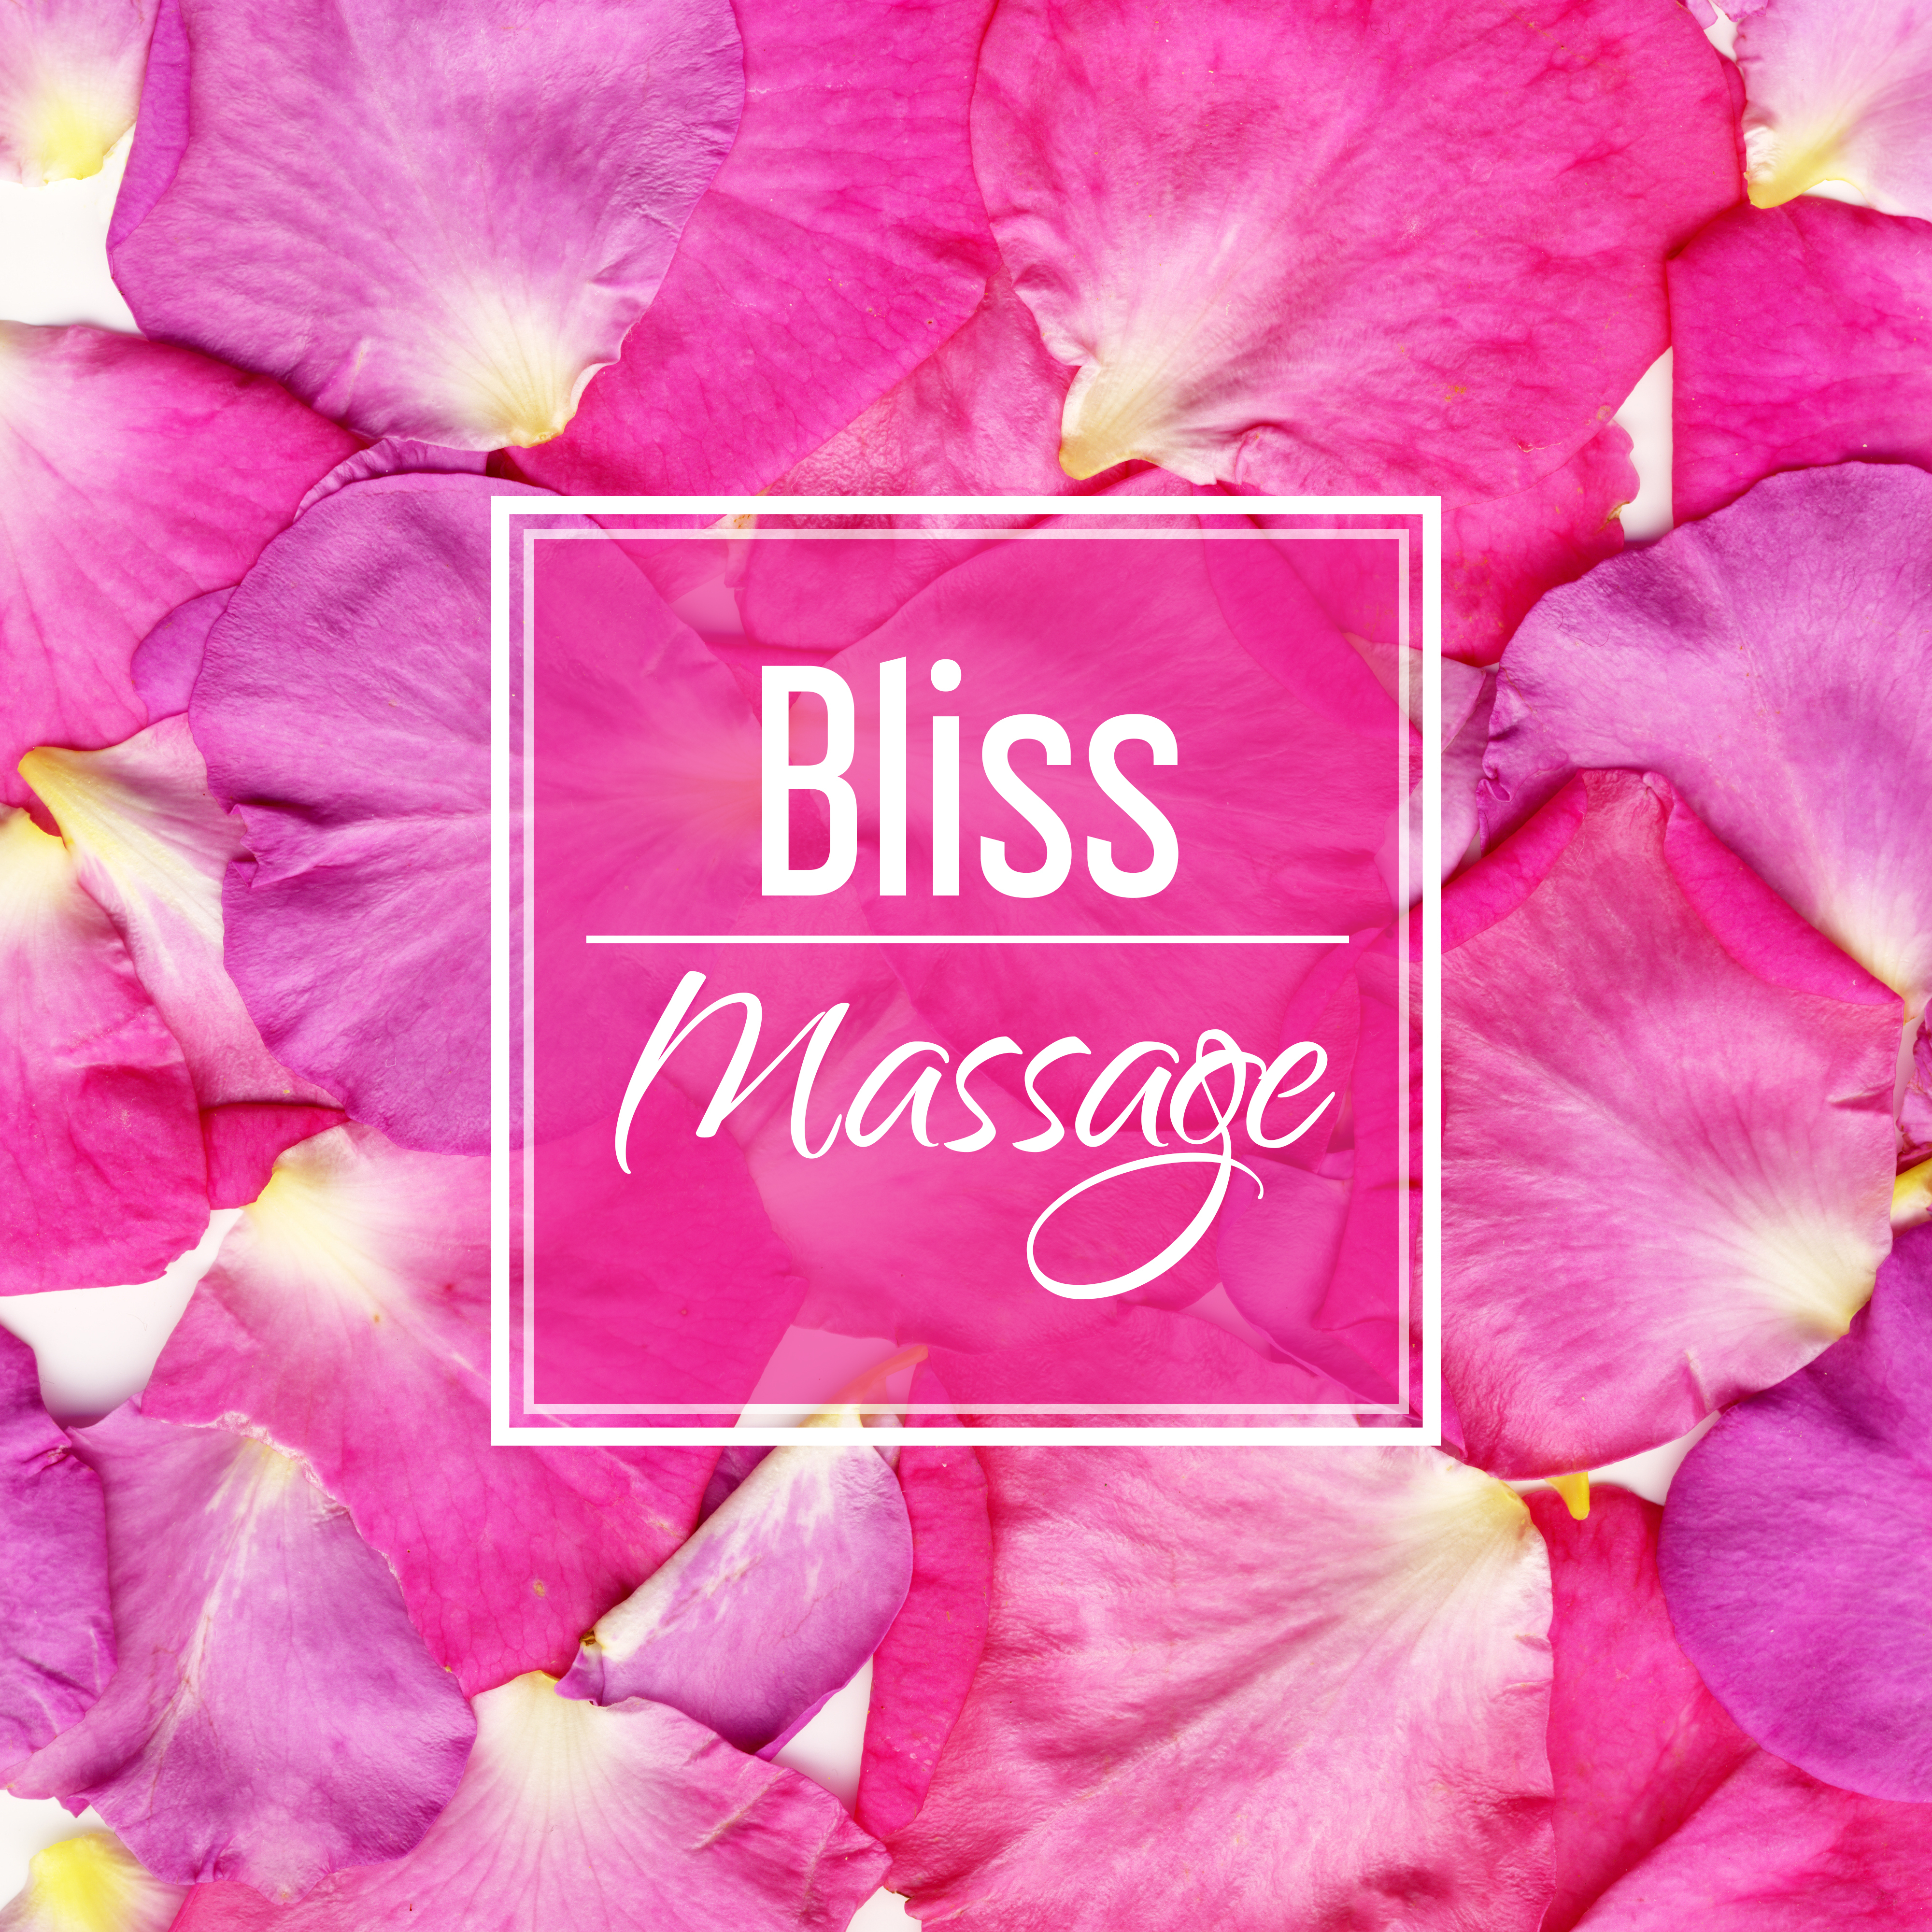 Bliss Massage  Nature Sounds, Relaxing Spa, Massage, Deep Rest, New Age 2017